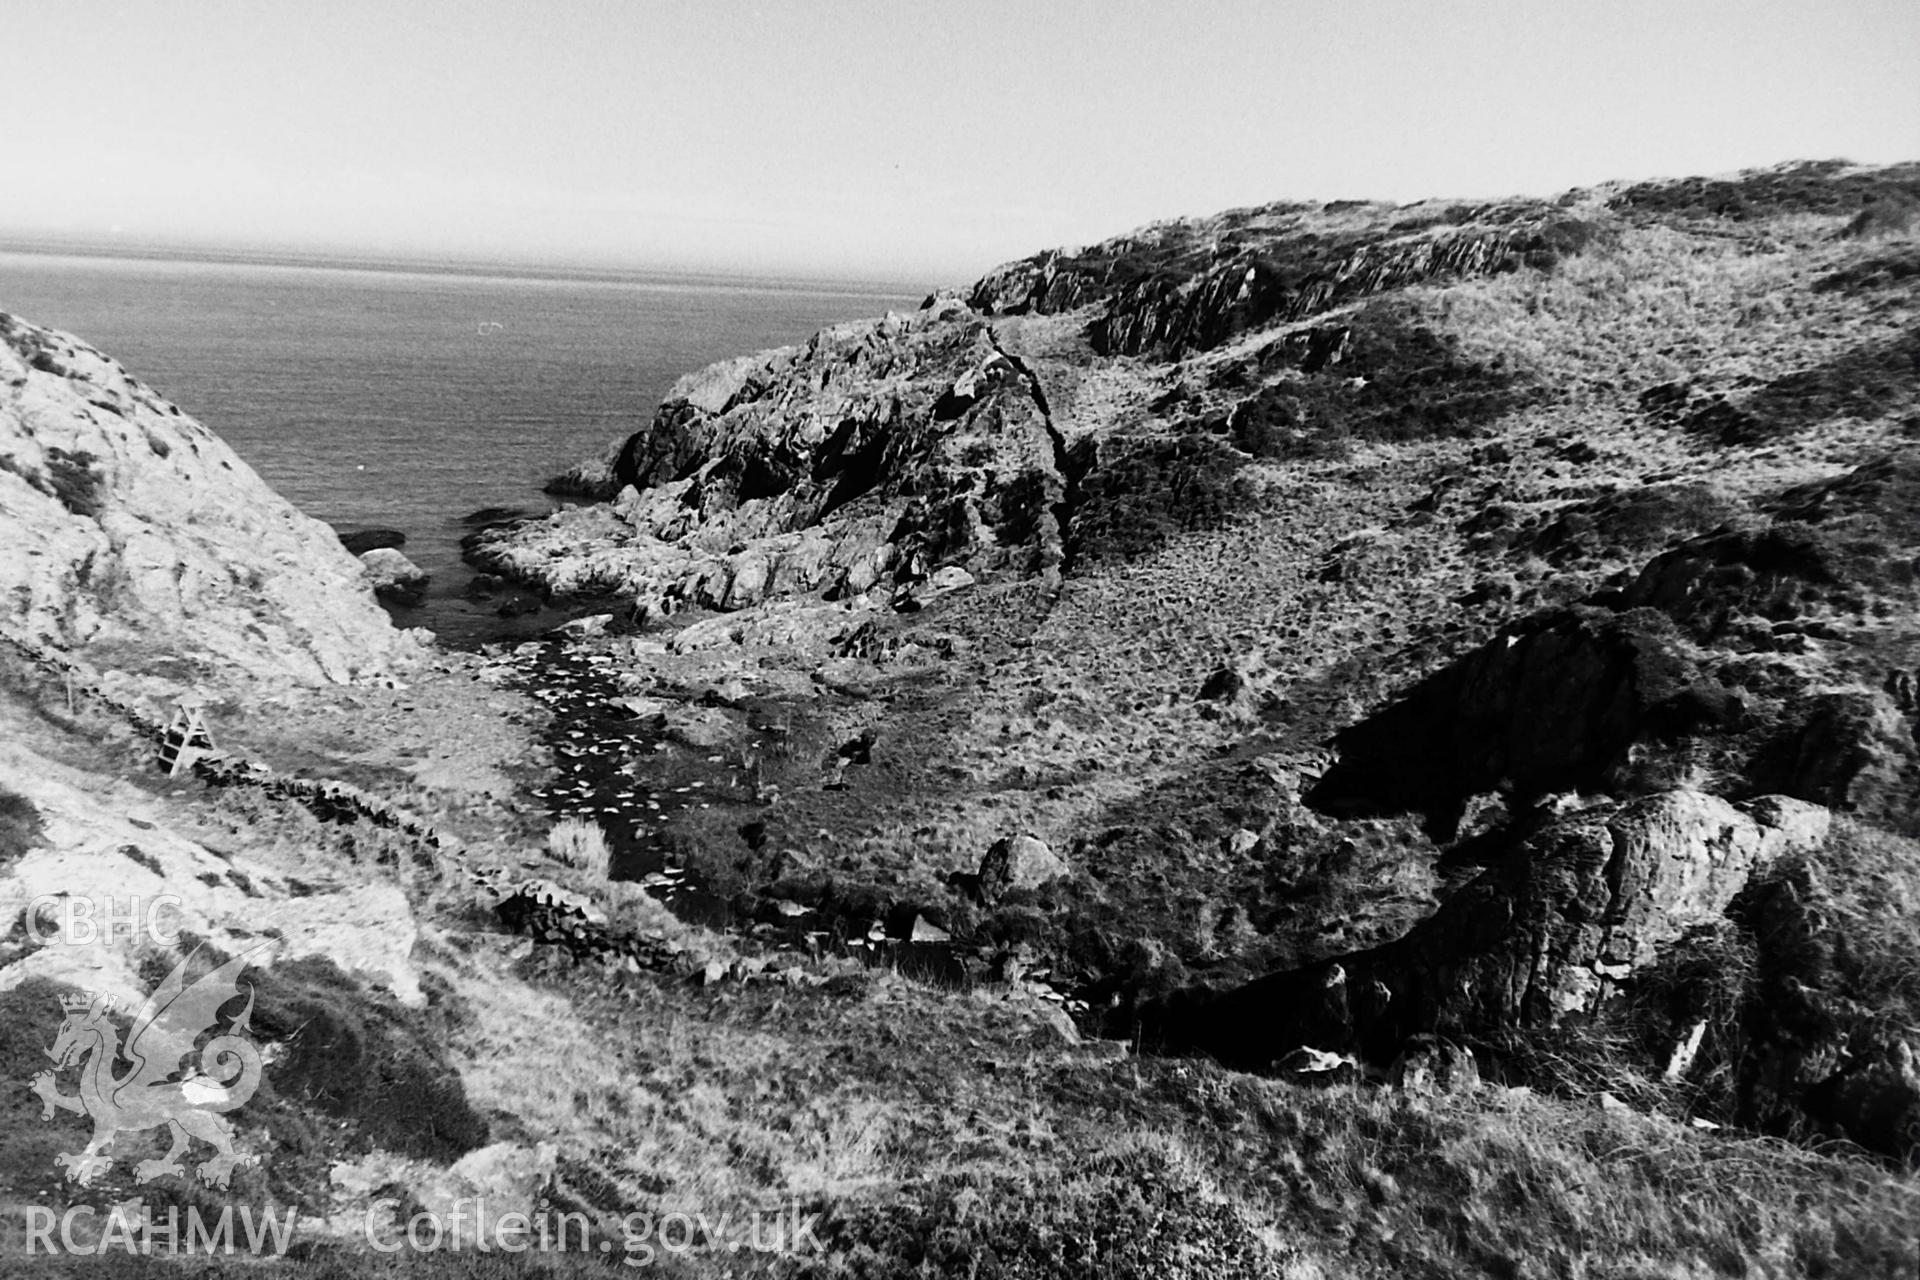 Black and white photo showing Ffynnon Eilian, taken by Paul R. Davis, undated.